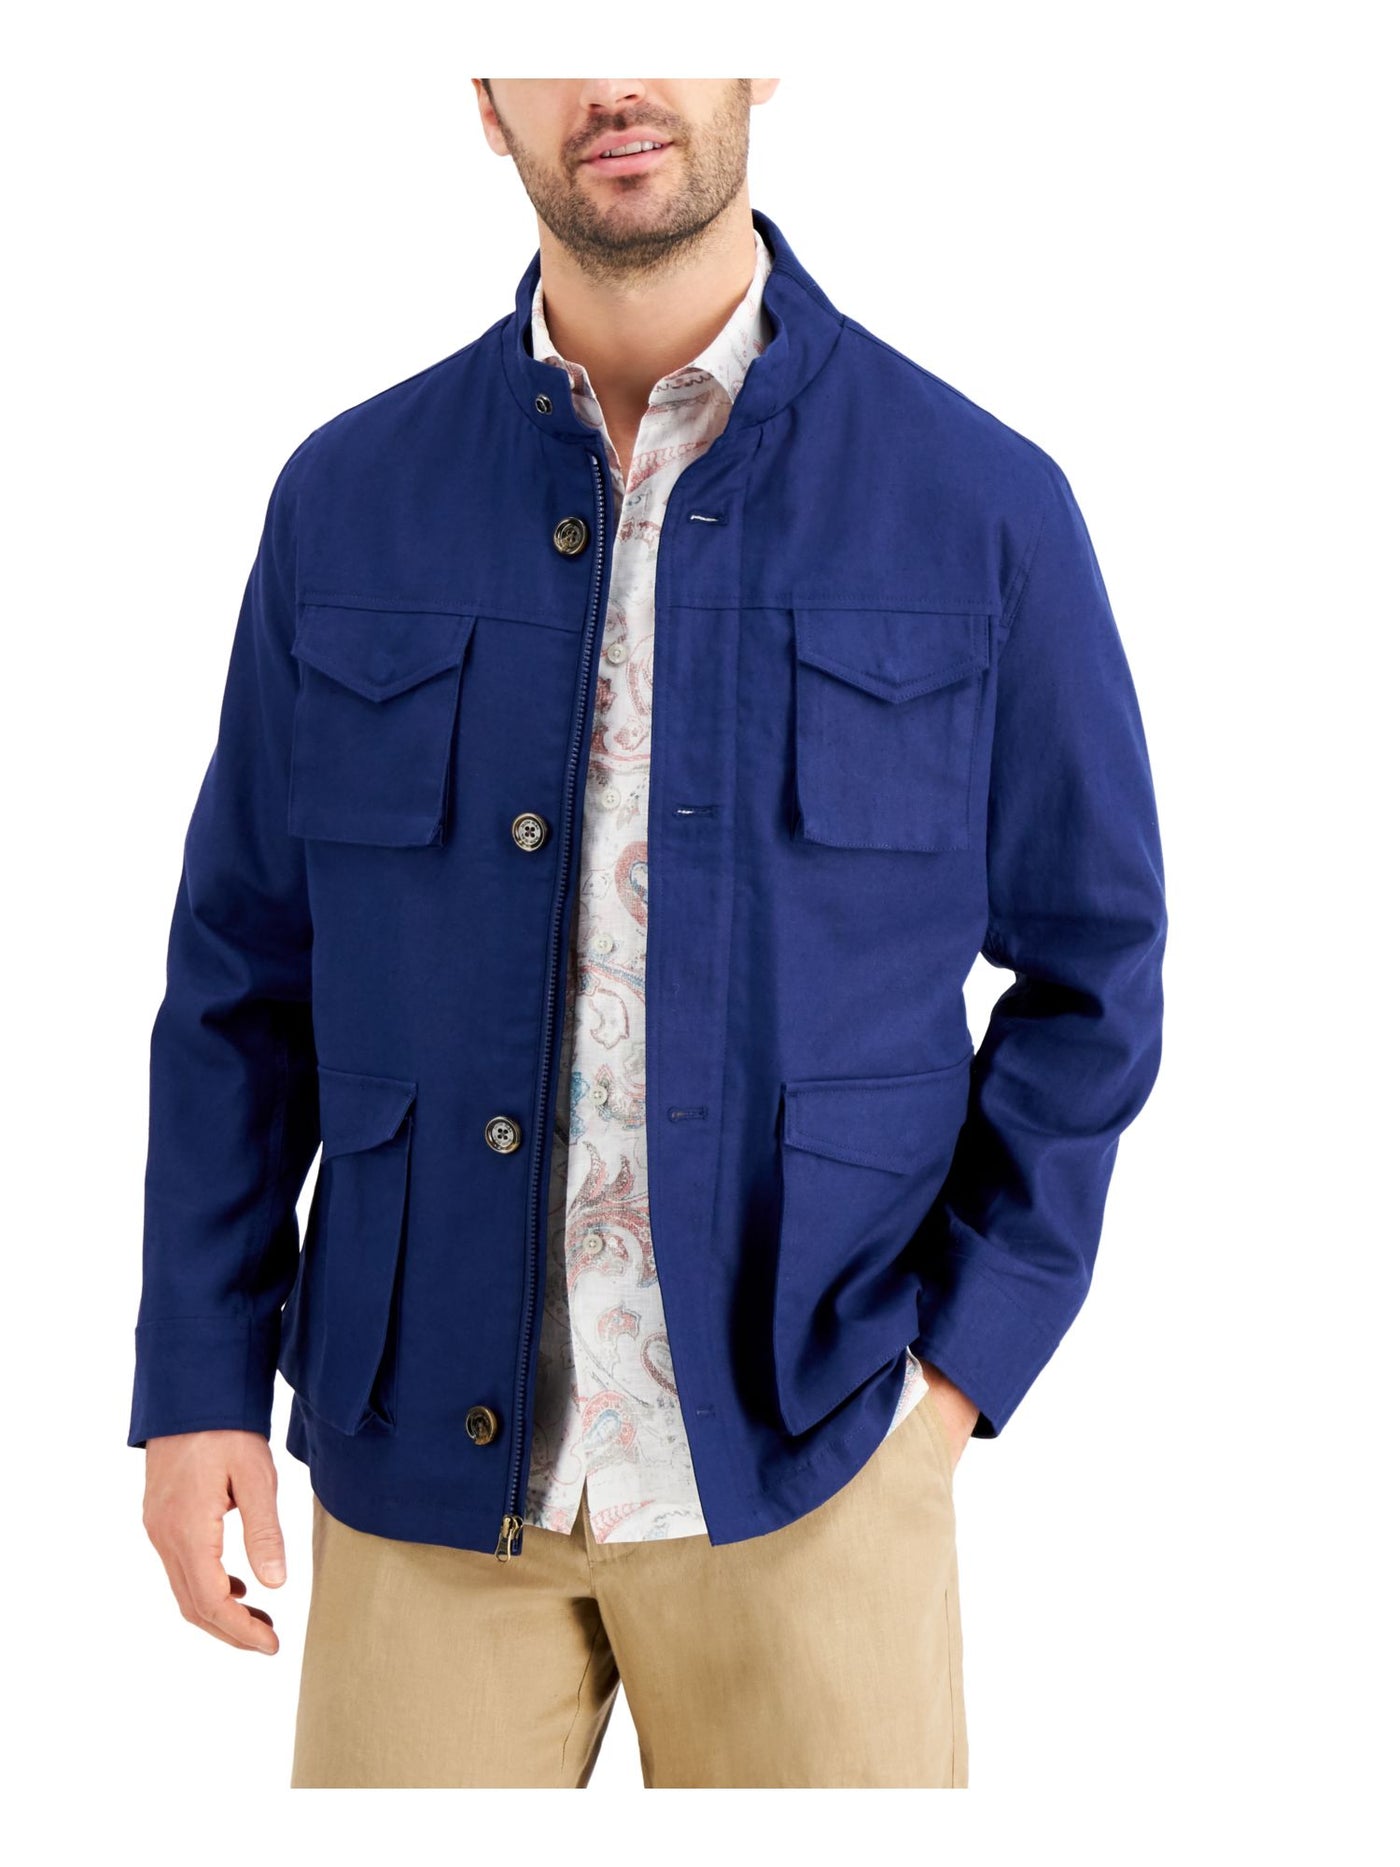 TASSO ELBA Mens Blue Cotton Zip Up Jacket S